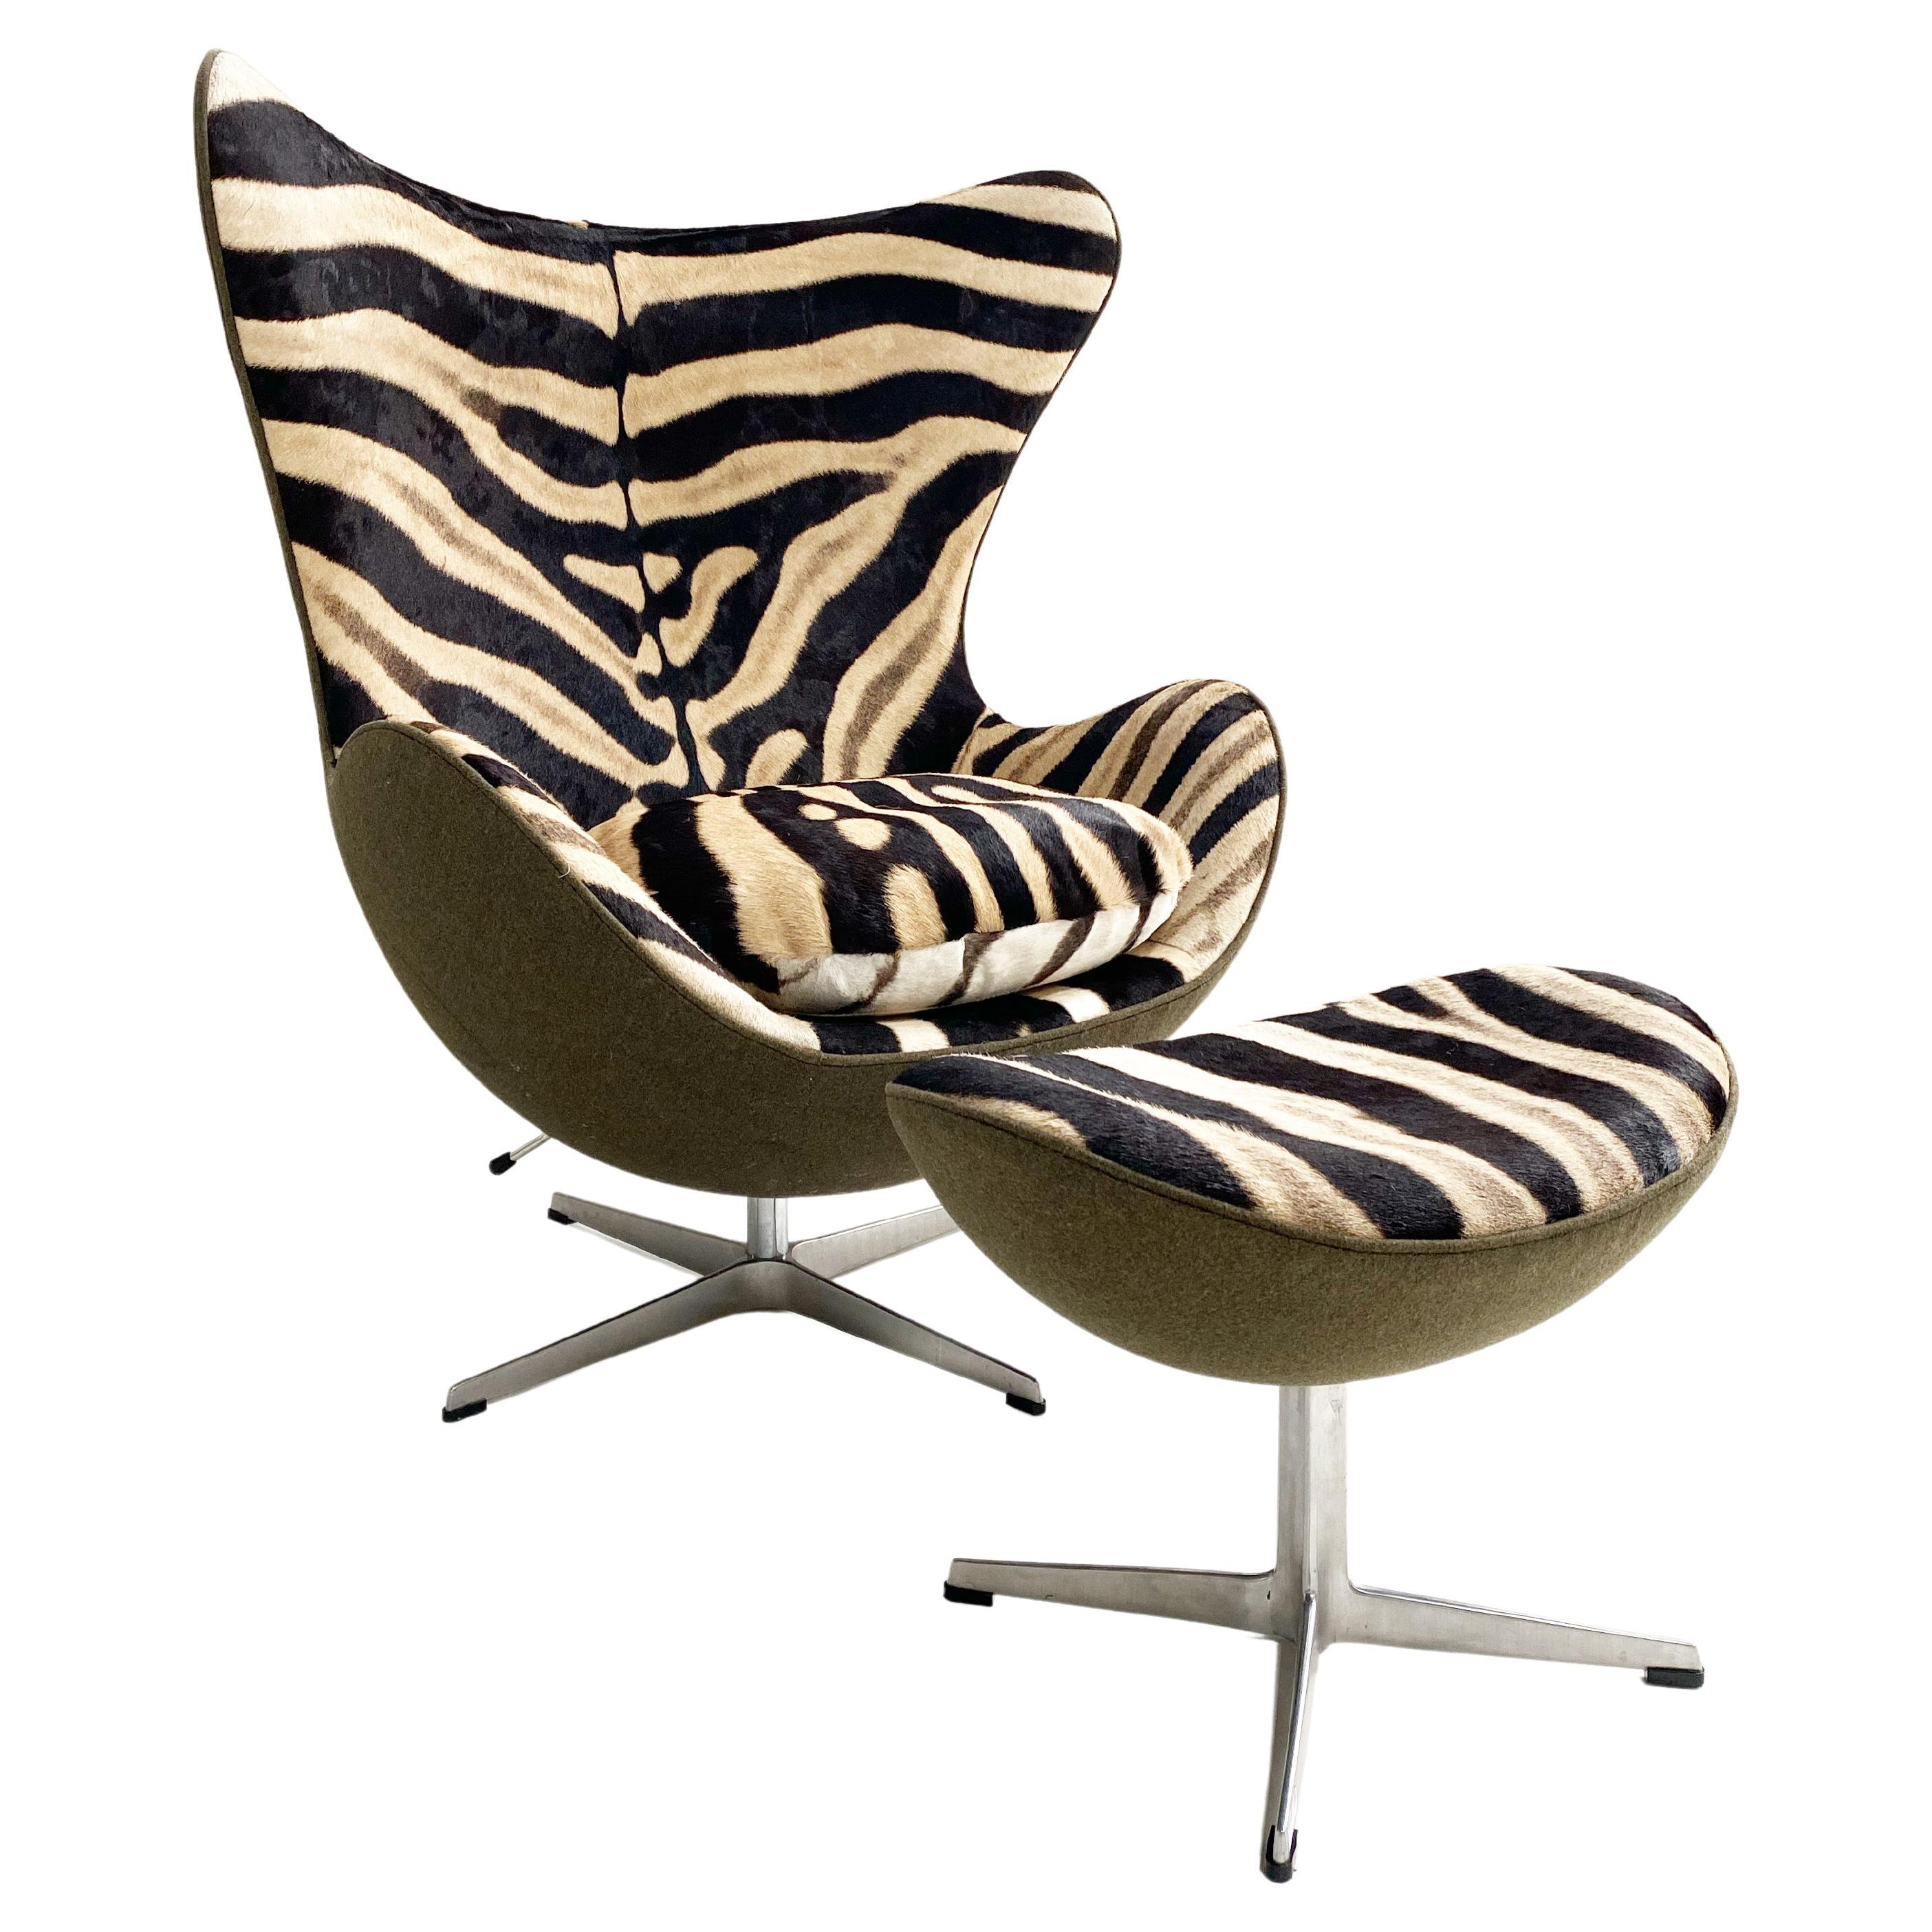 Bespoke Arne Jacobsen Egg Chair and Ottoman in Zebra and Loro Piana Wool